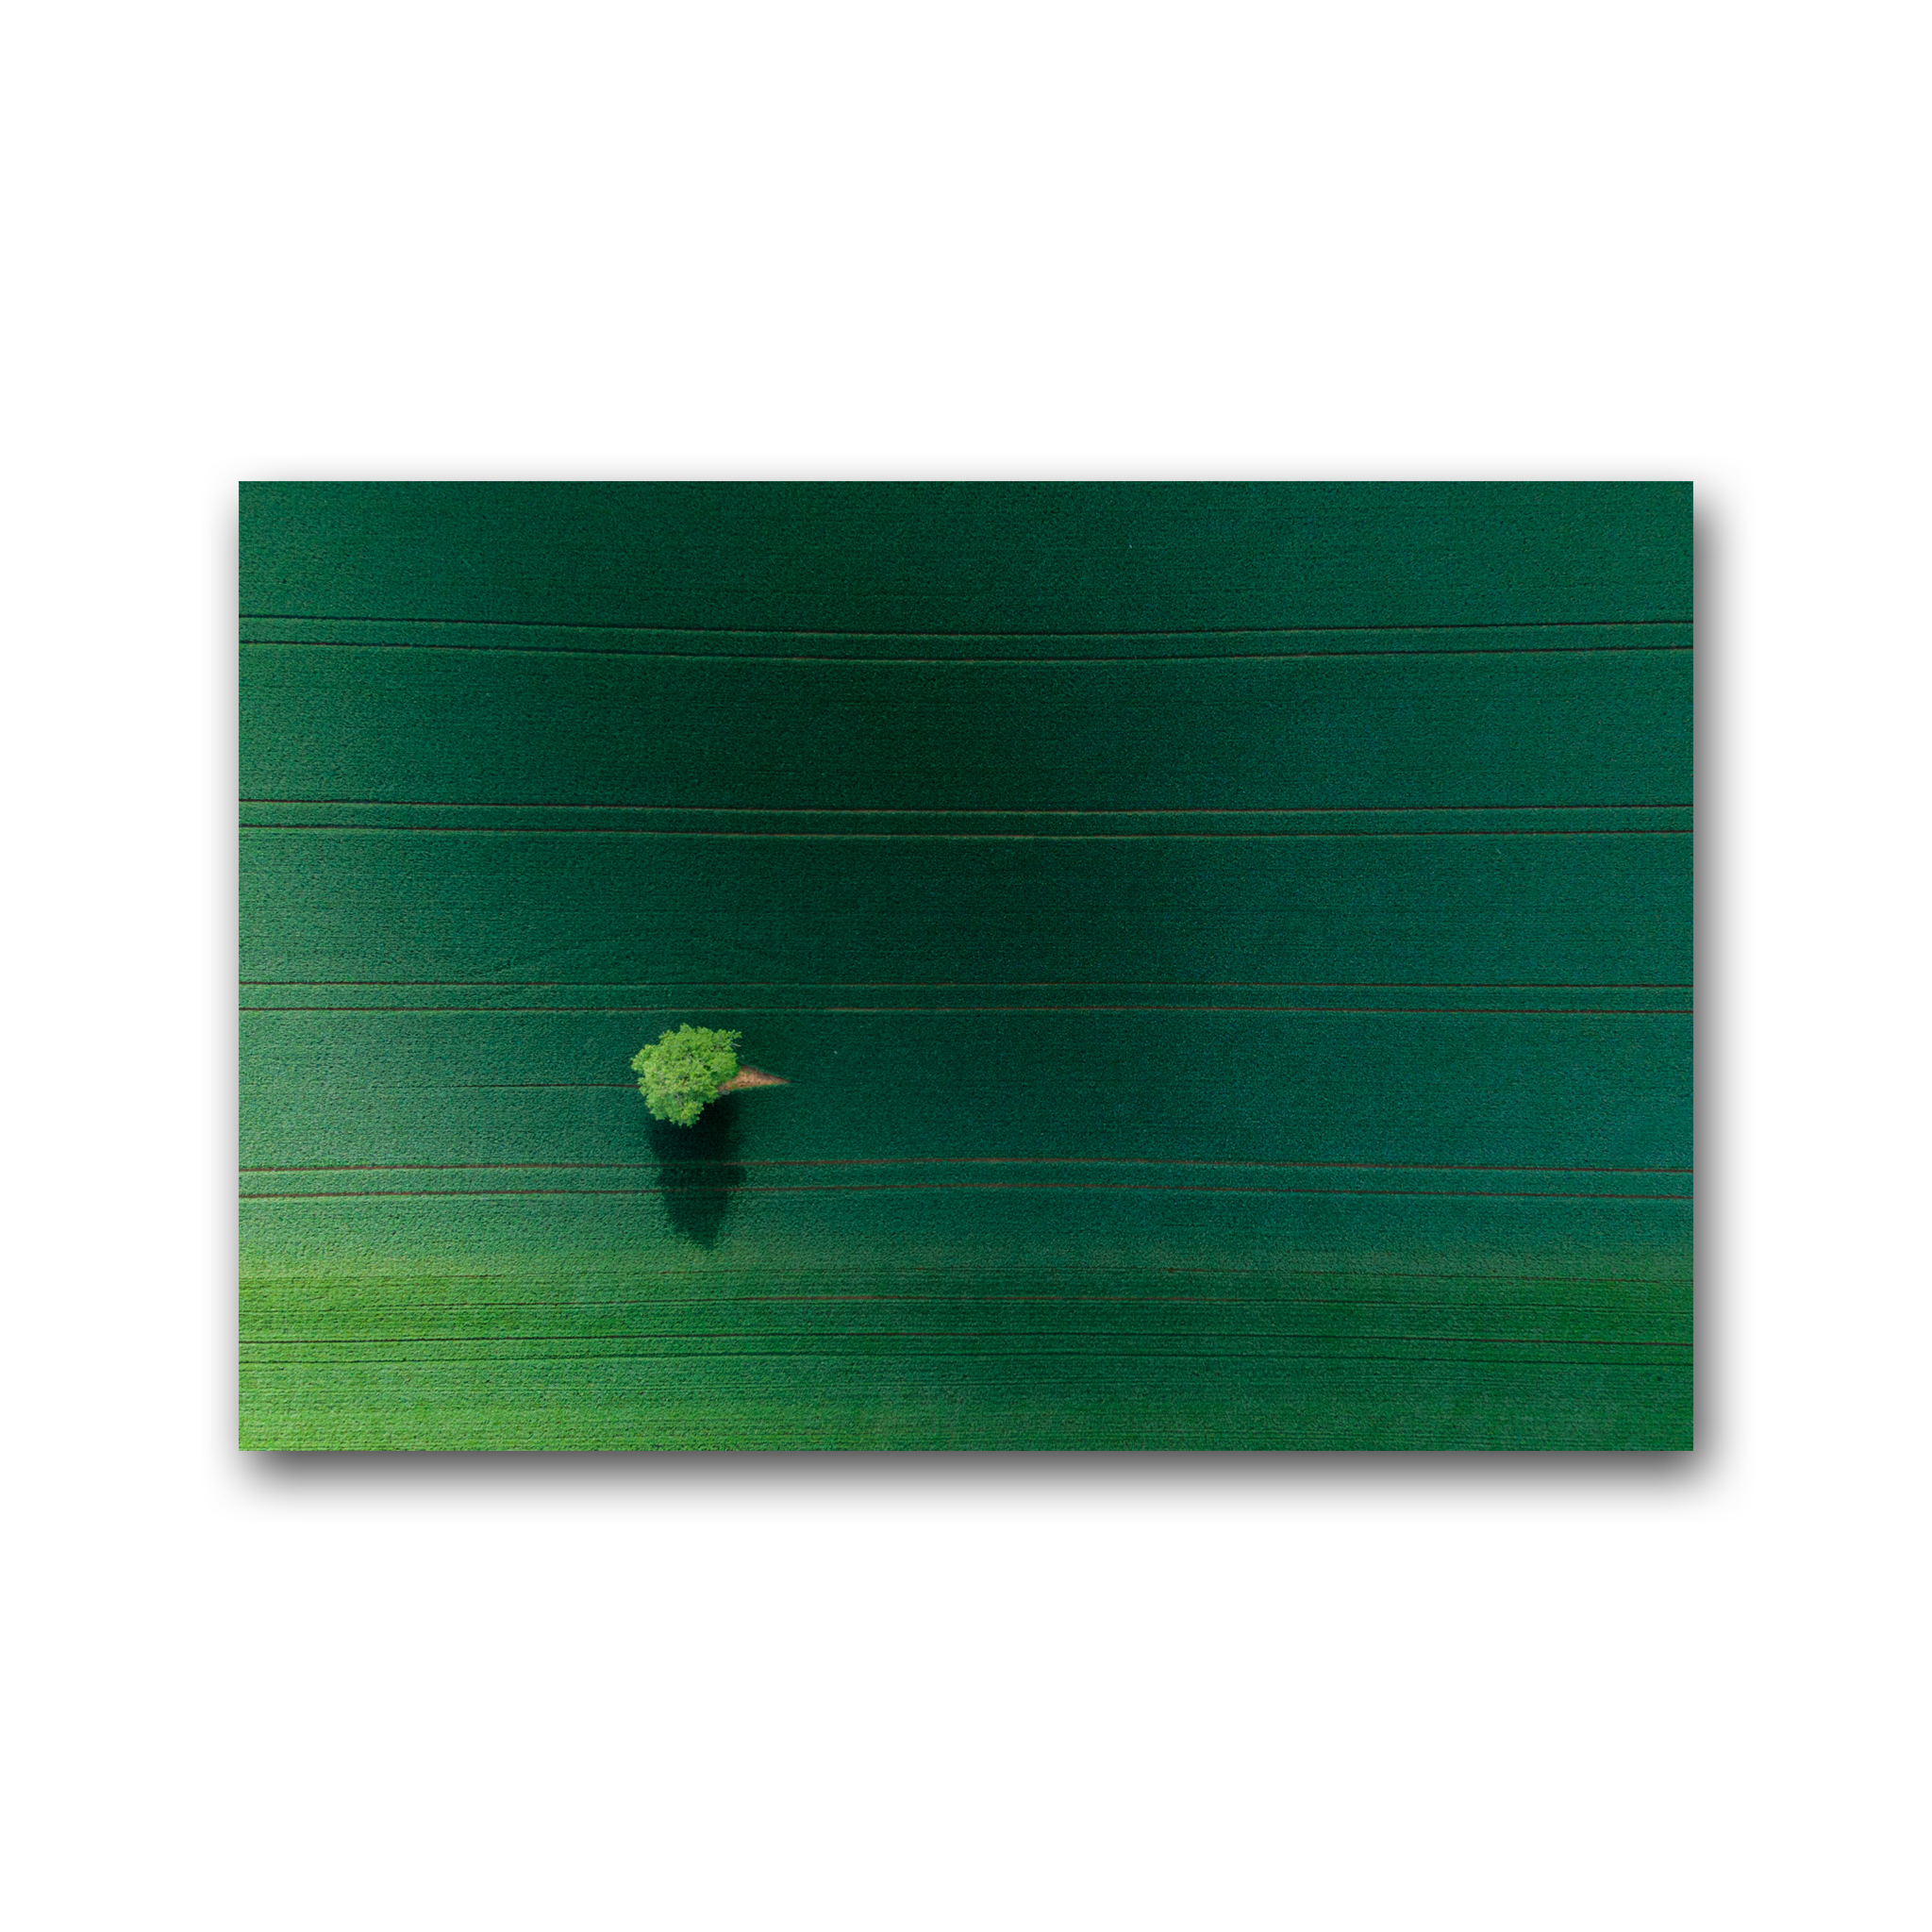 Fifty shades of green - Wandbild Alu-Verbund 3:2